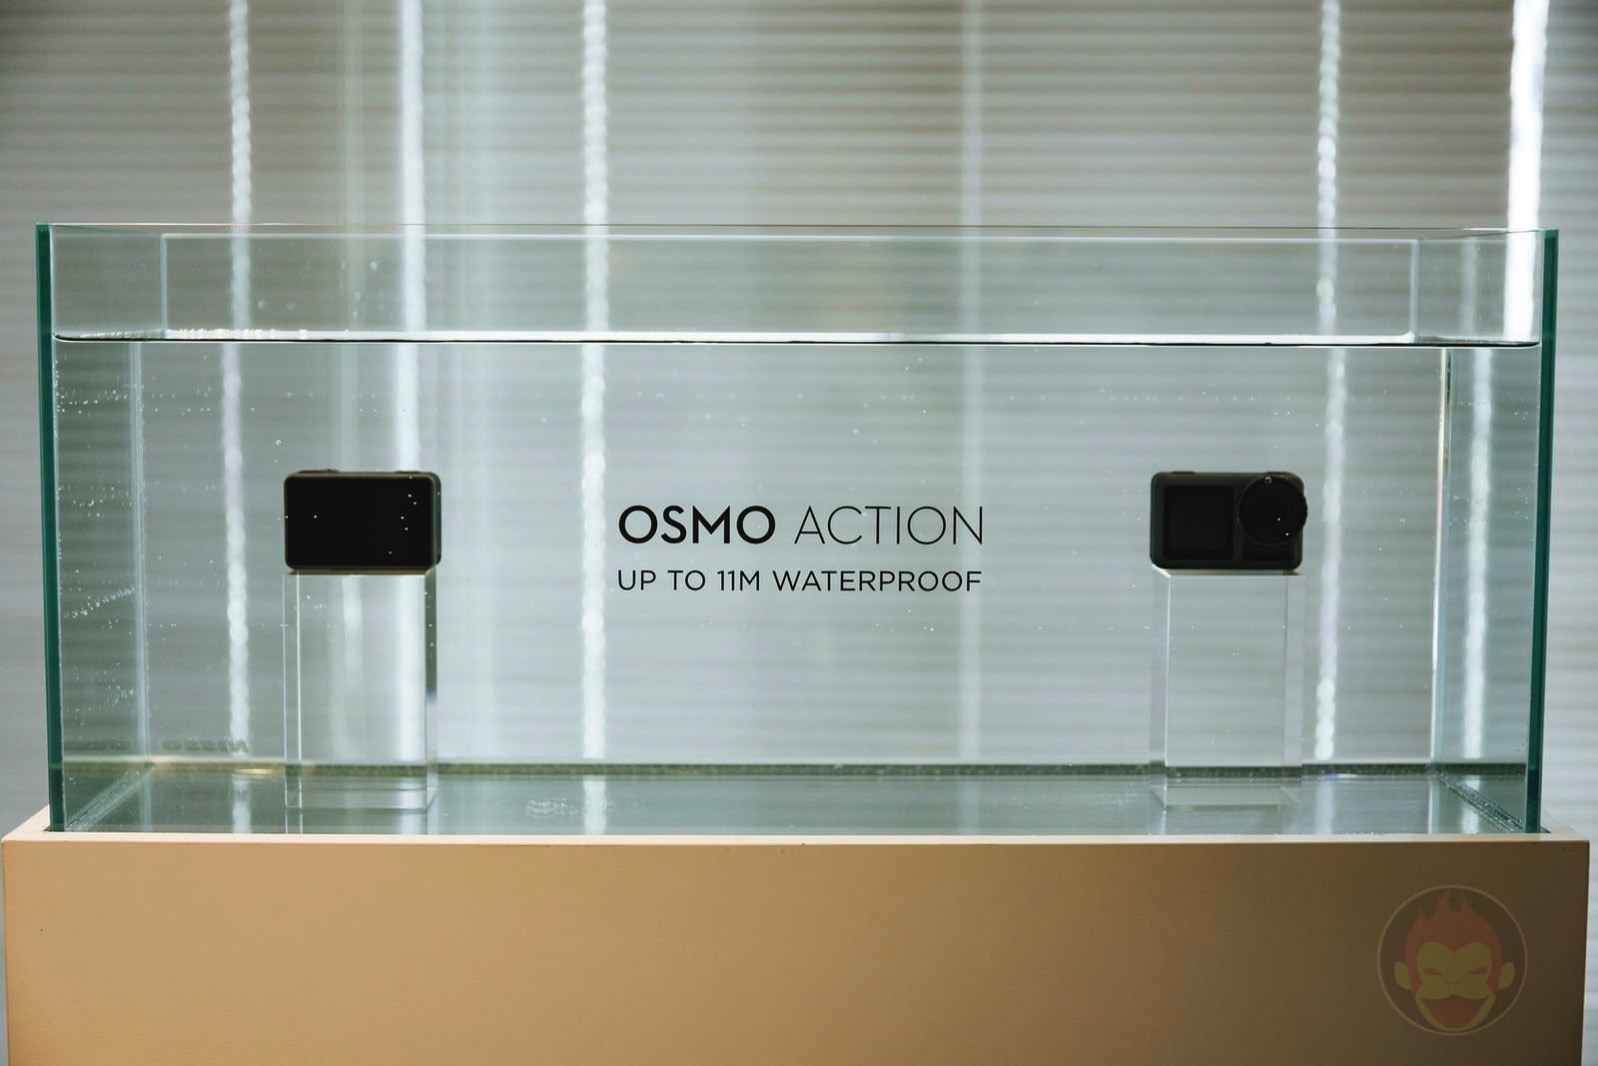 DJI-OSMO-Action-Hands-on-01.jpg